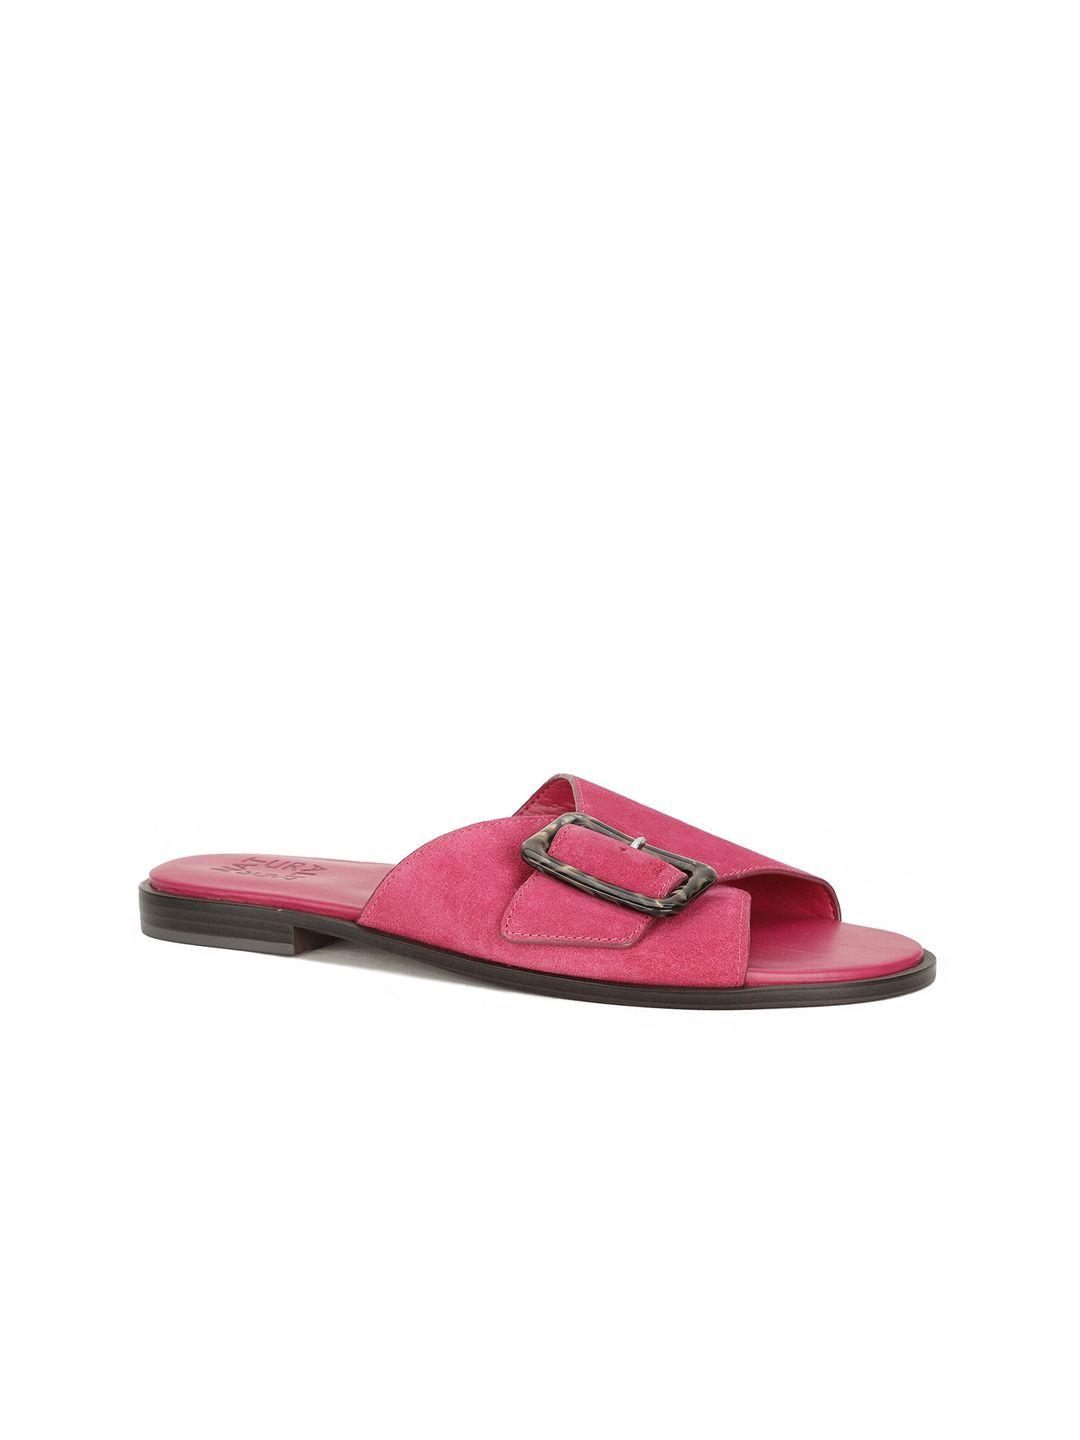 naturalizer women pink open toe flats